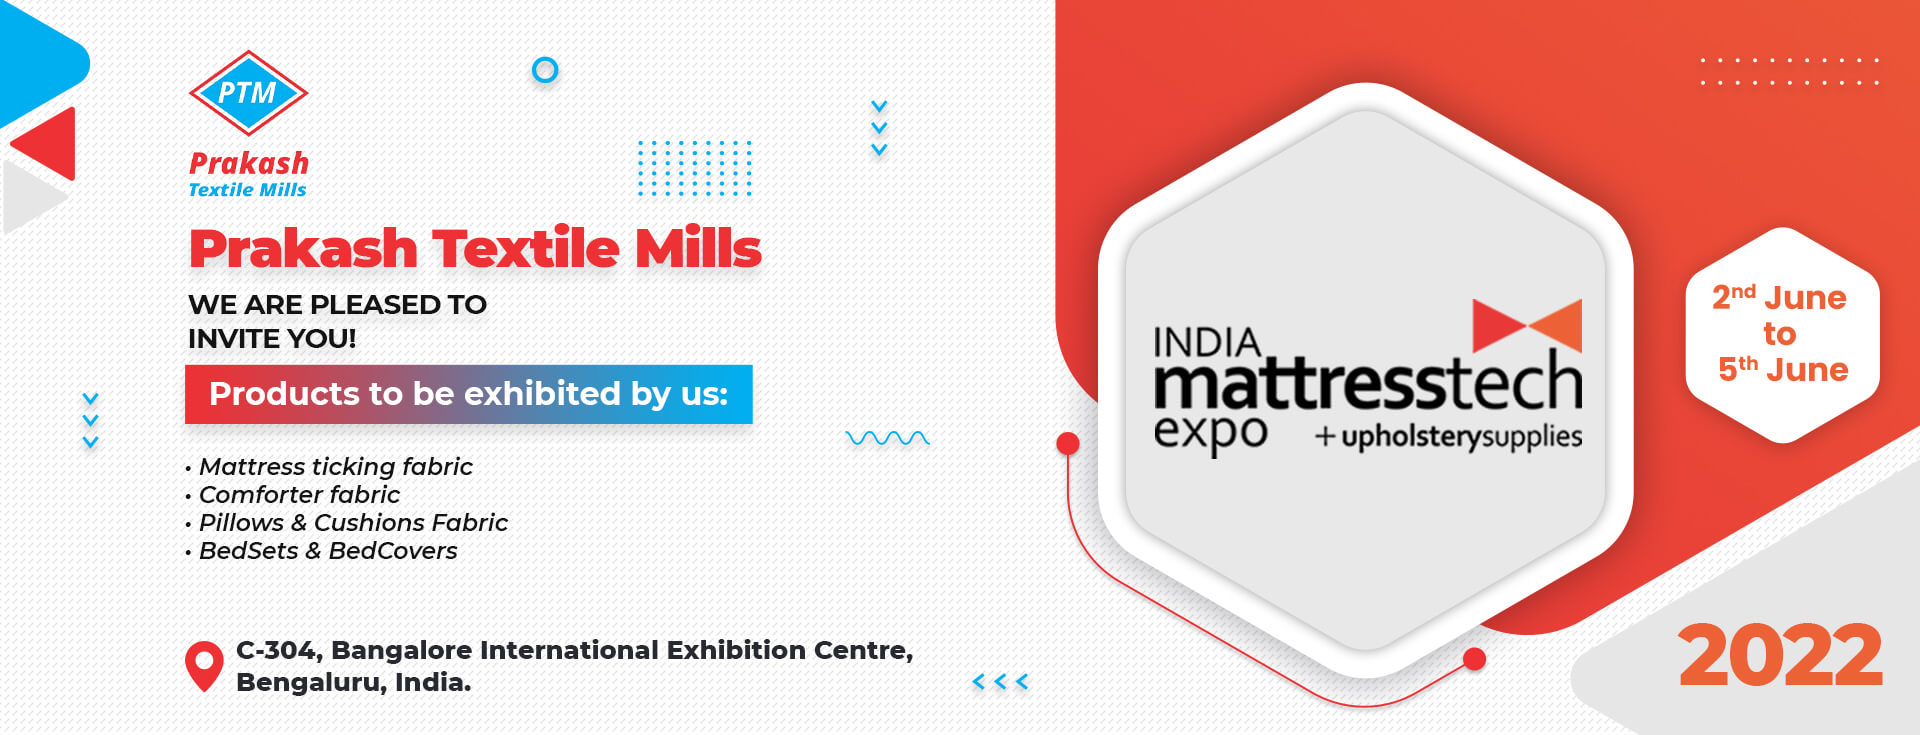 India Mattresstech Expo 2022, Bangalore